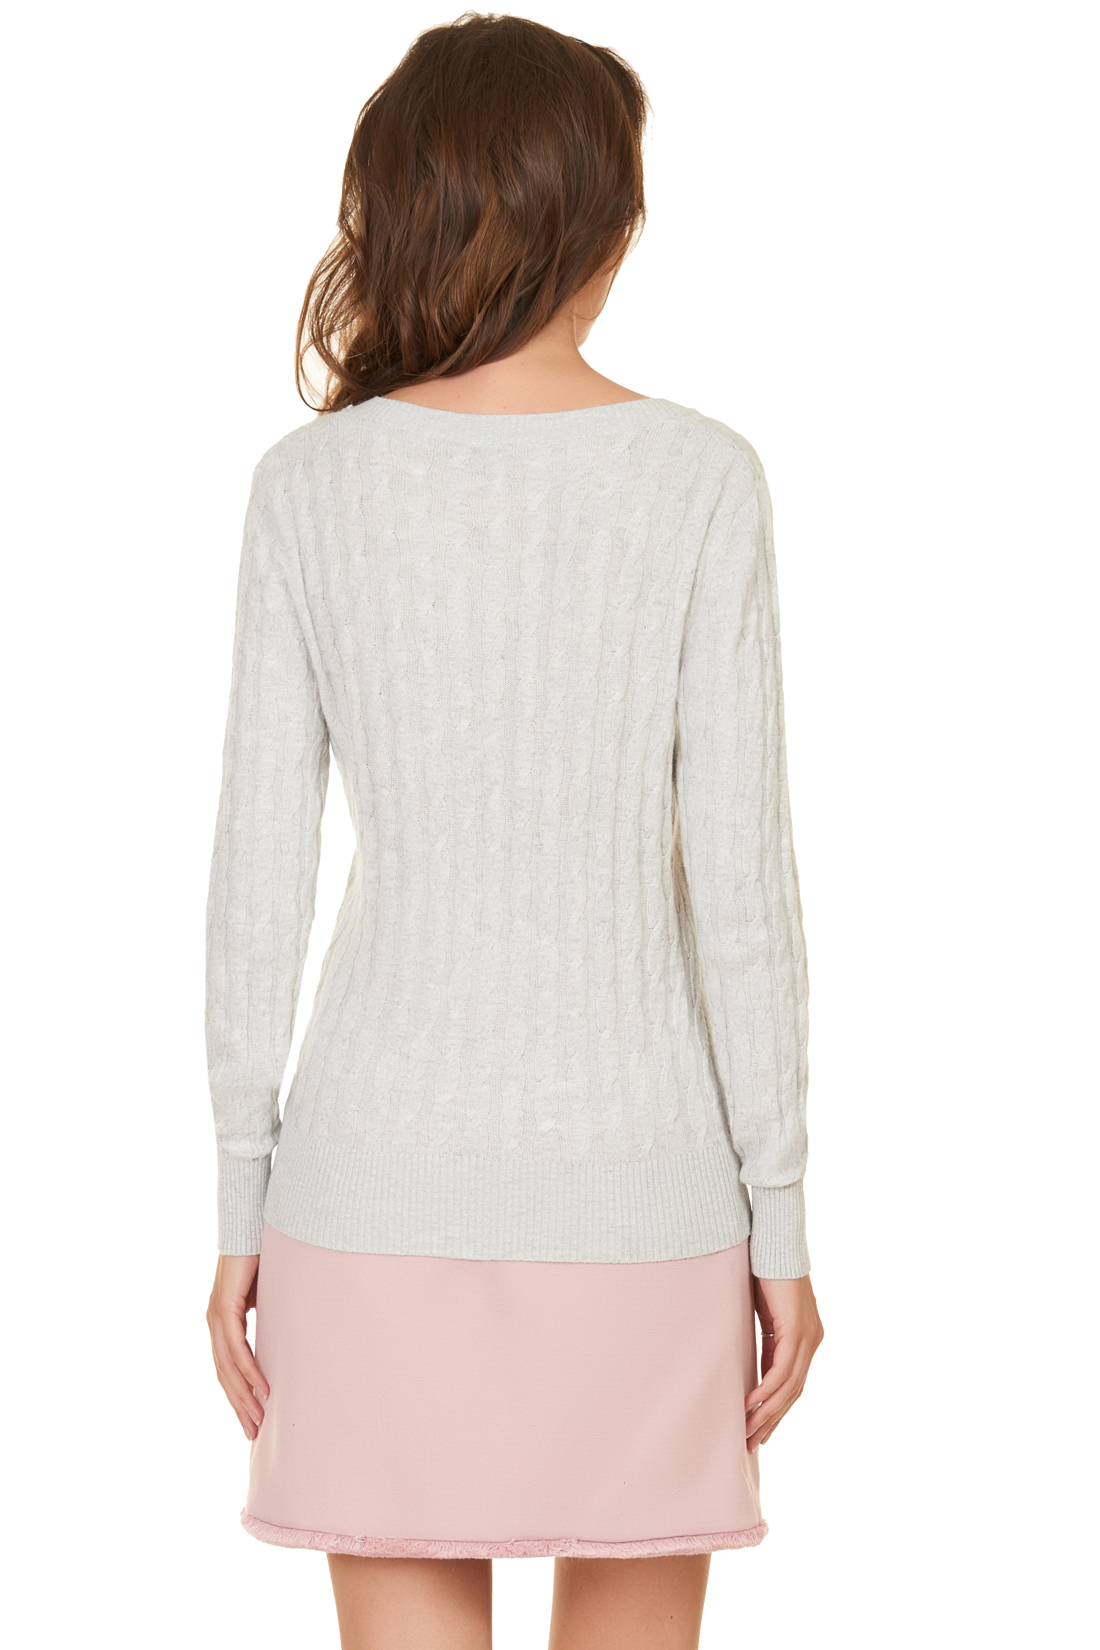 Базовый пуловер с узором и ангорой (арт. baon B137703), размер XS, цвет silver melange#серый Базовый пуловер с узором и ангорой (арт. baon B137703) - фото 2